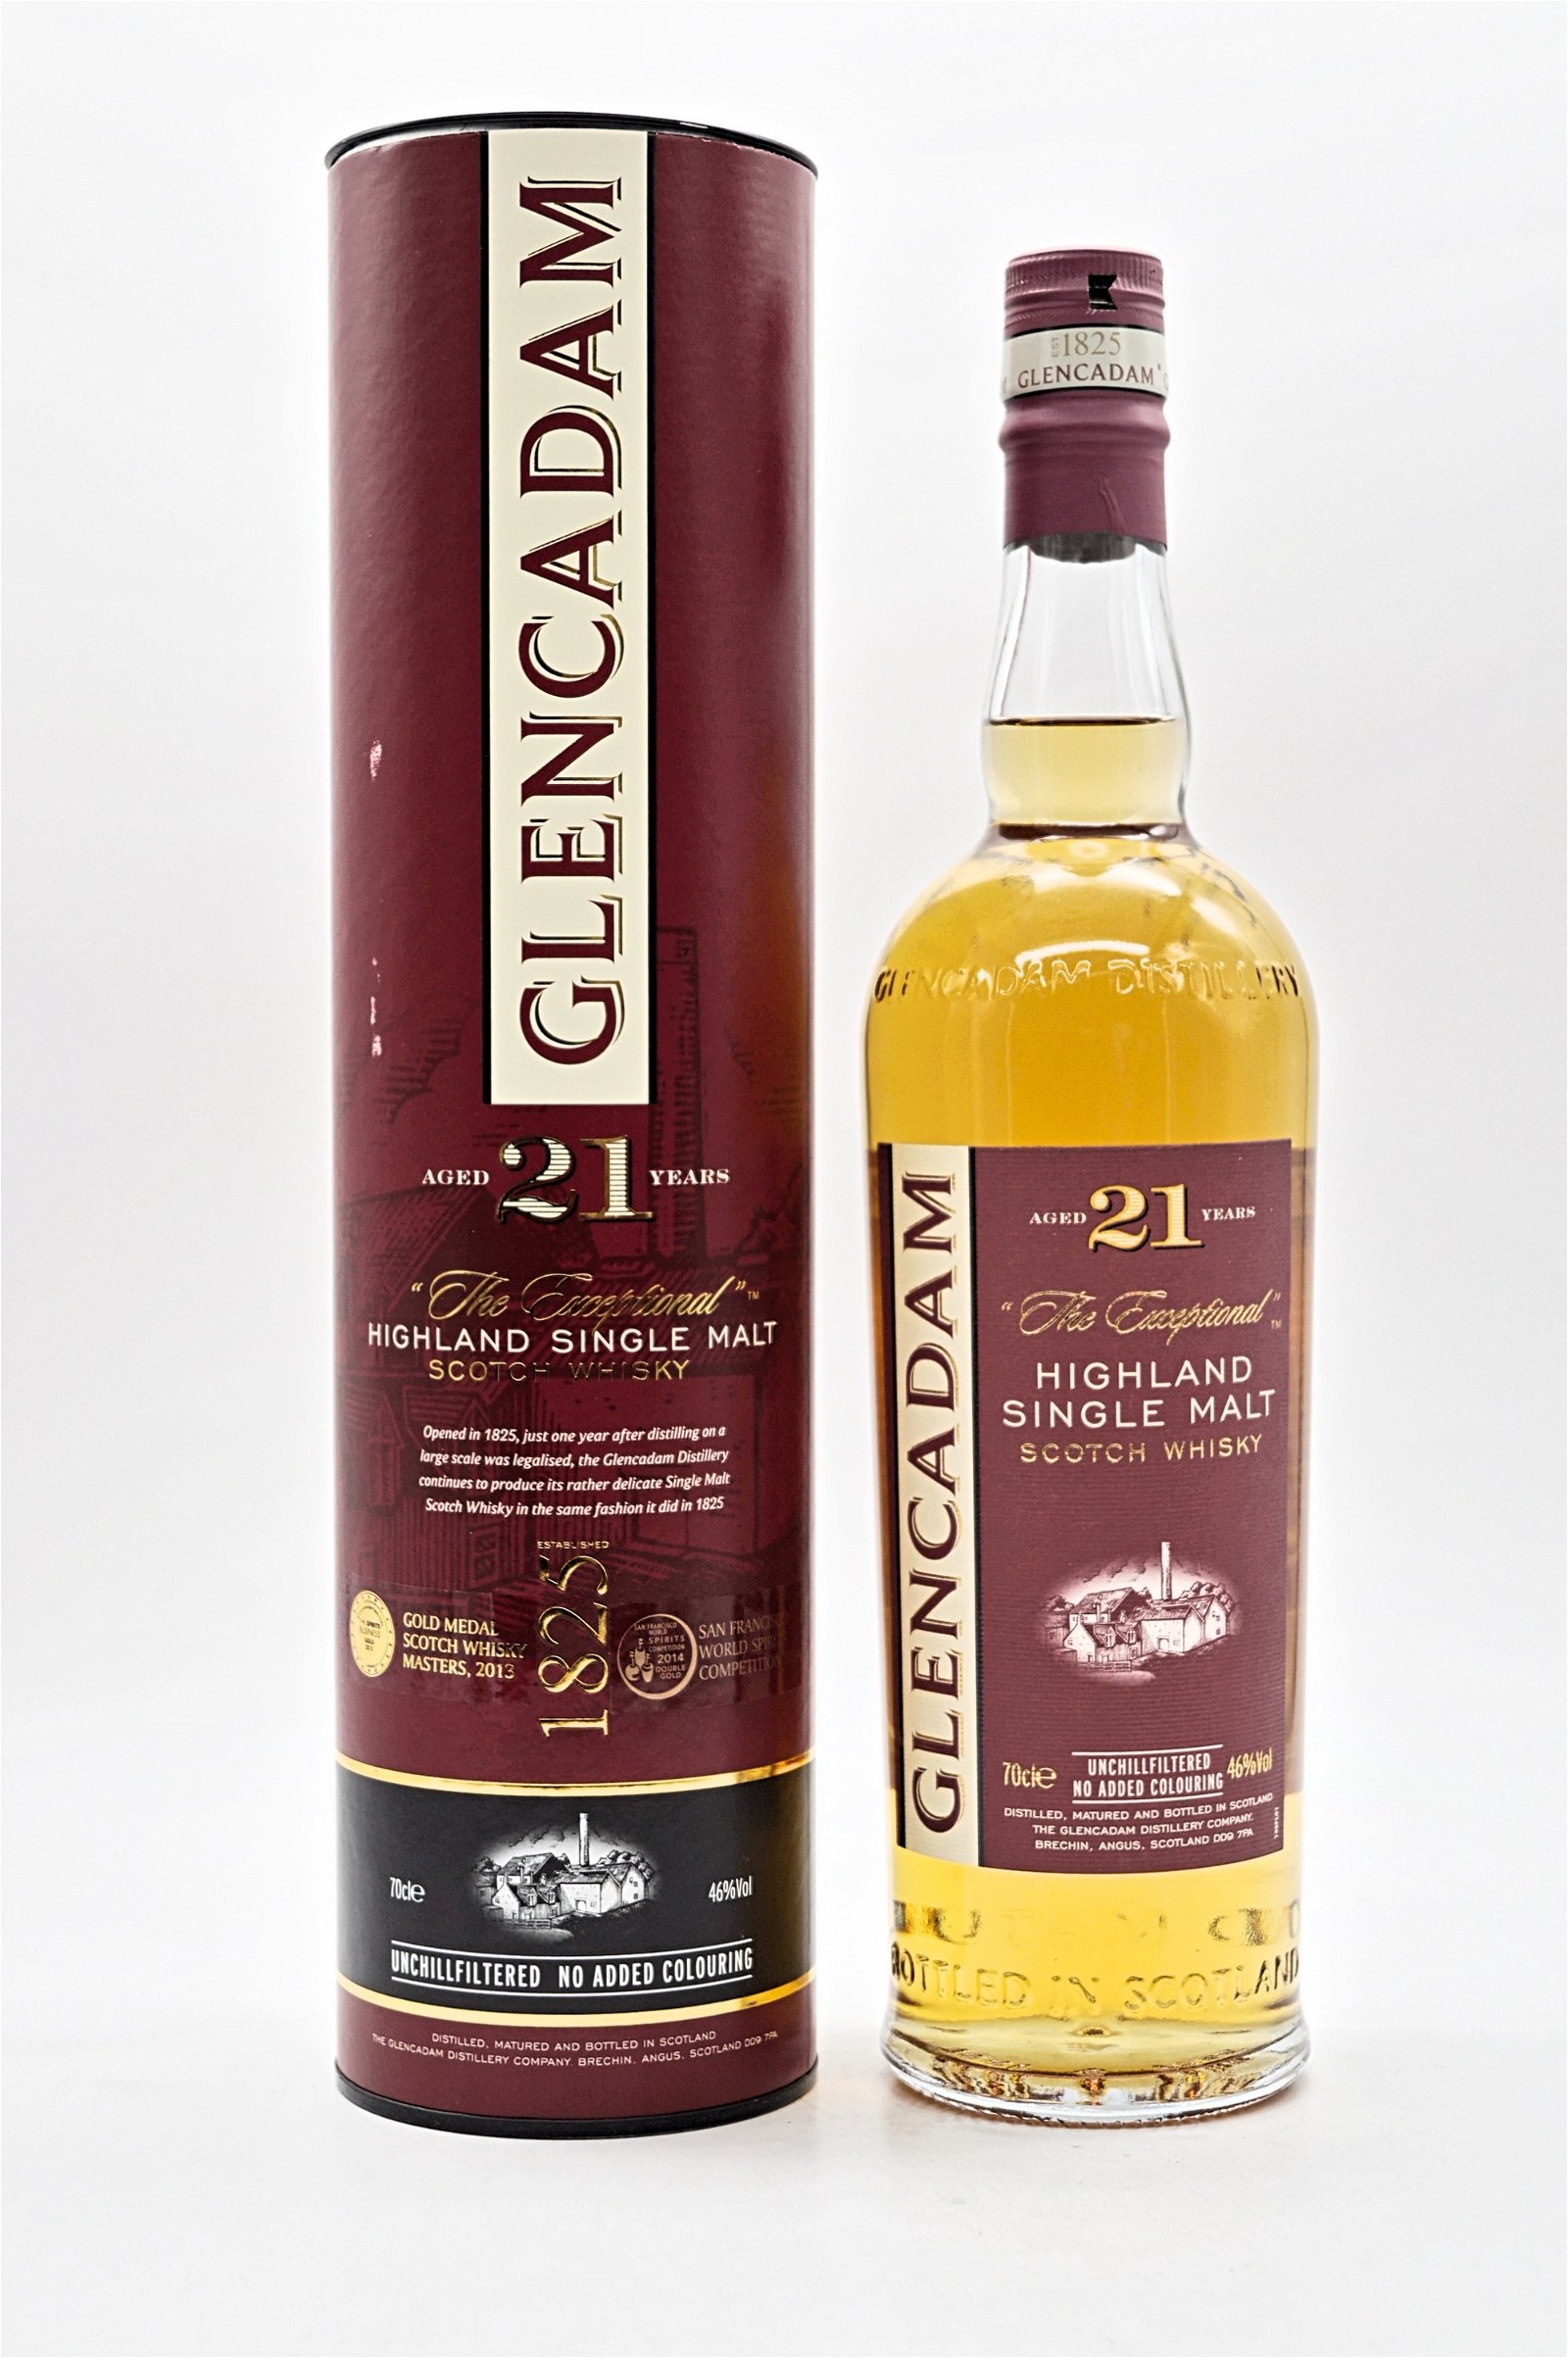 Glencadam 21 Jahre The Exceptional Highland Single Malt Scotch Whisky